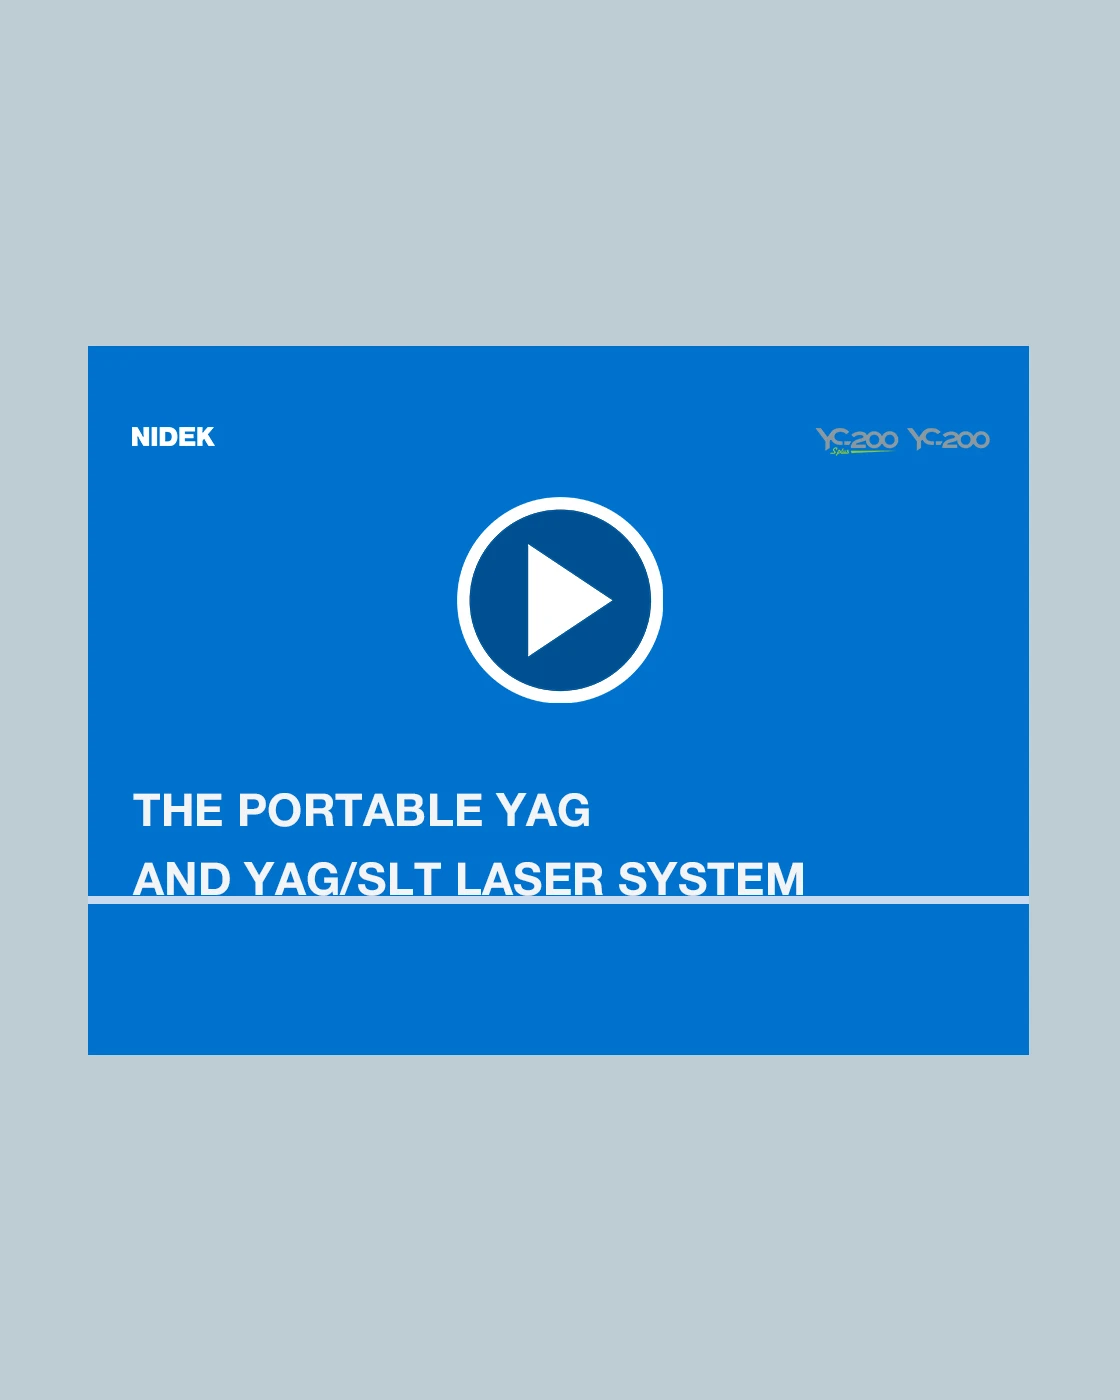 The Portable YAG and YAG/SLT Laser System